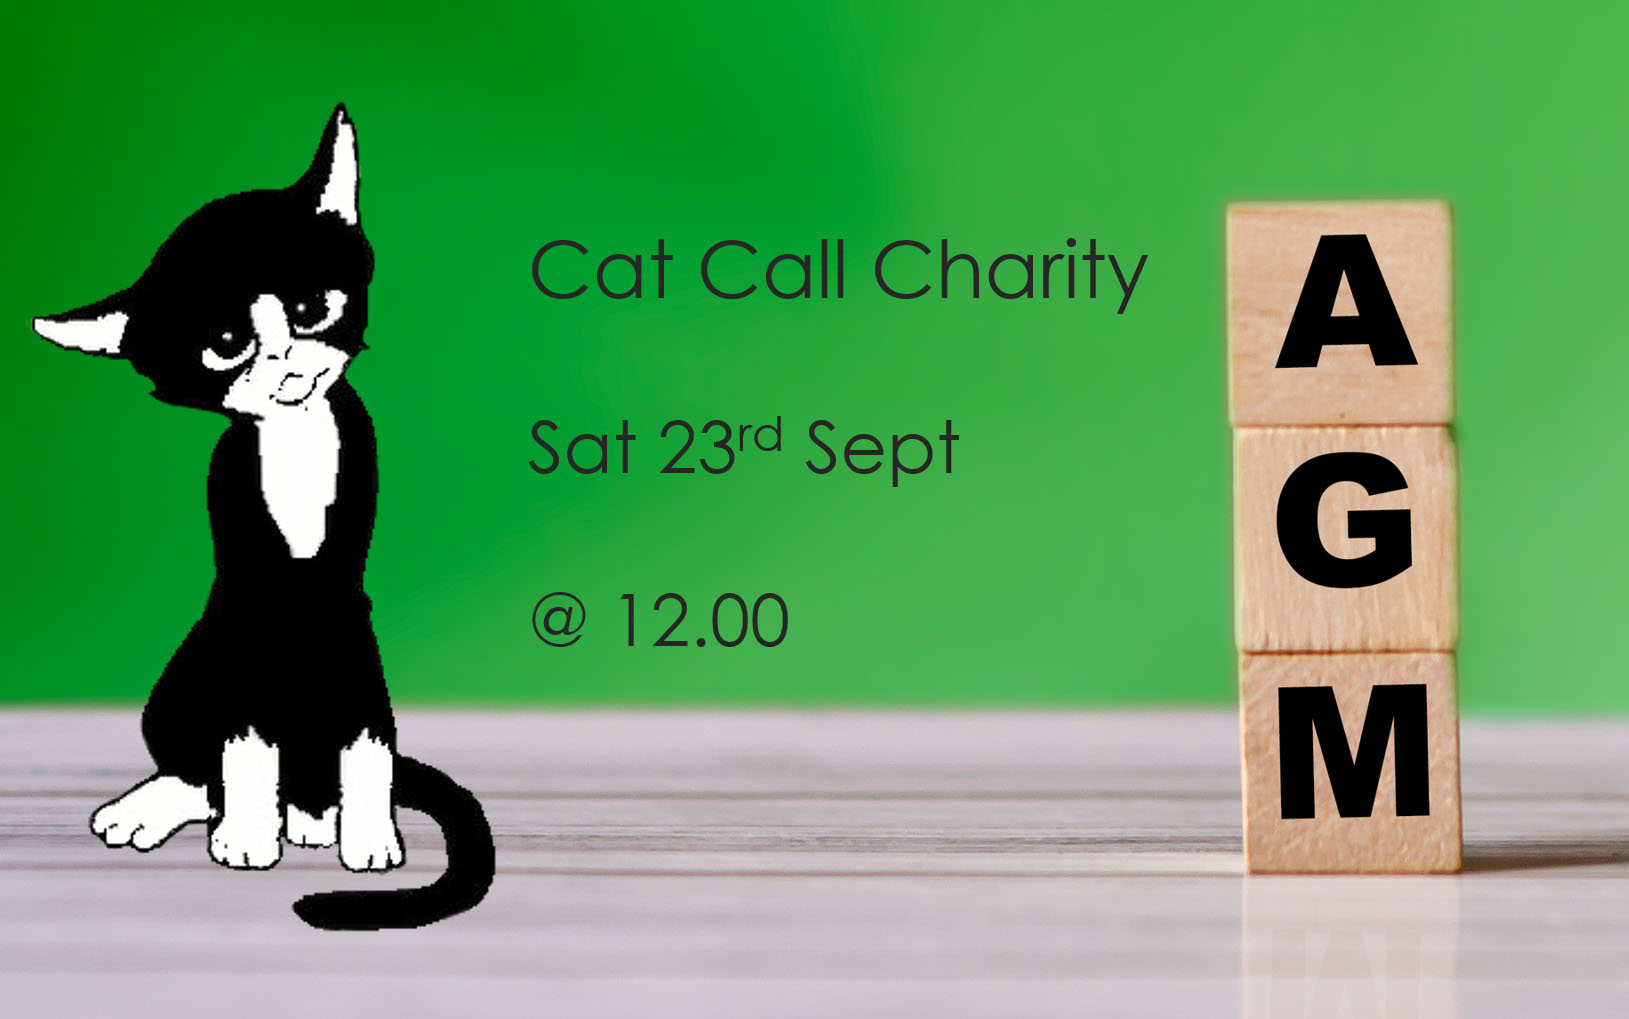 Cat Call Charity AGM Sat 23rd Sept